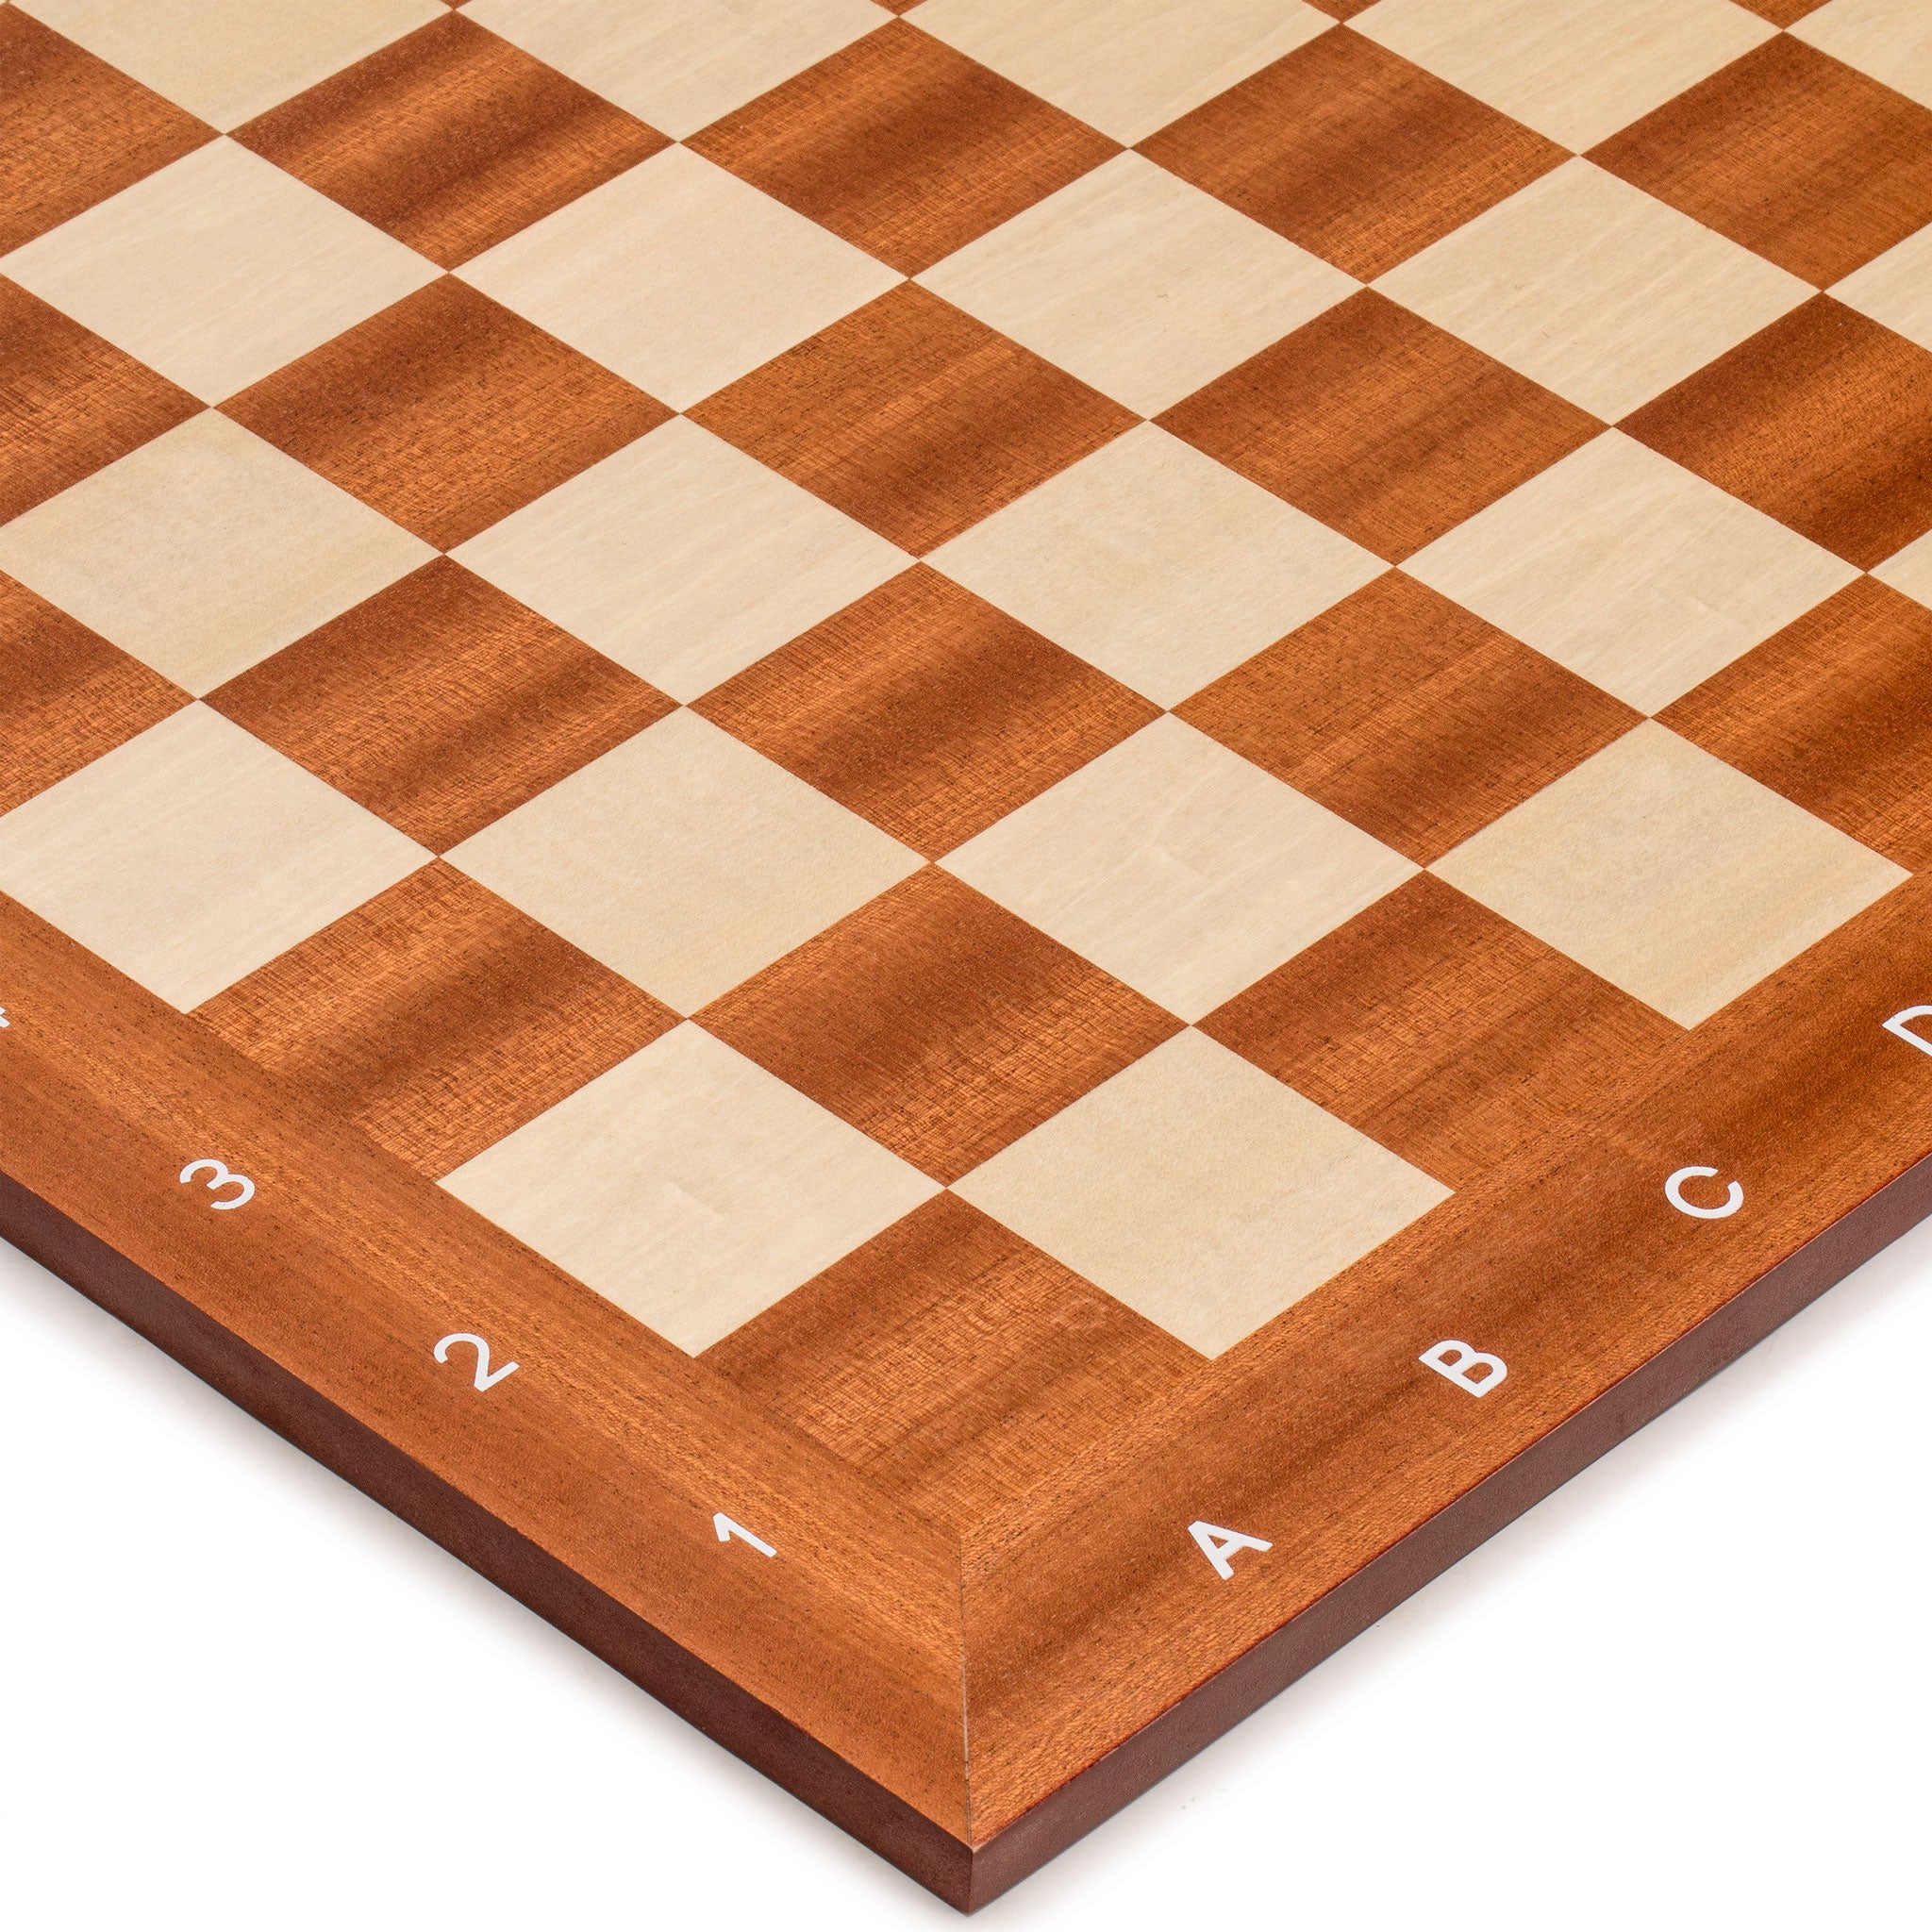 Husaria Professional Staunton Tournament Chess Board, No. 5, 18.9"-Husaria